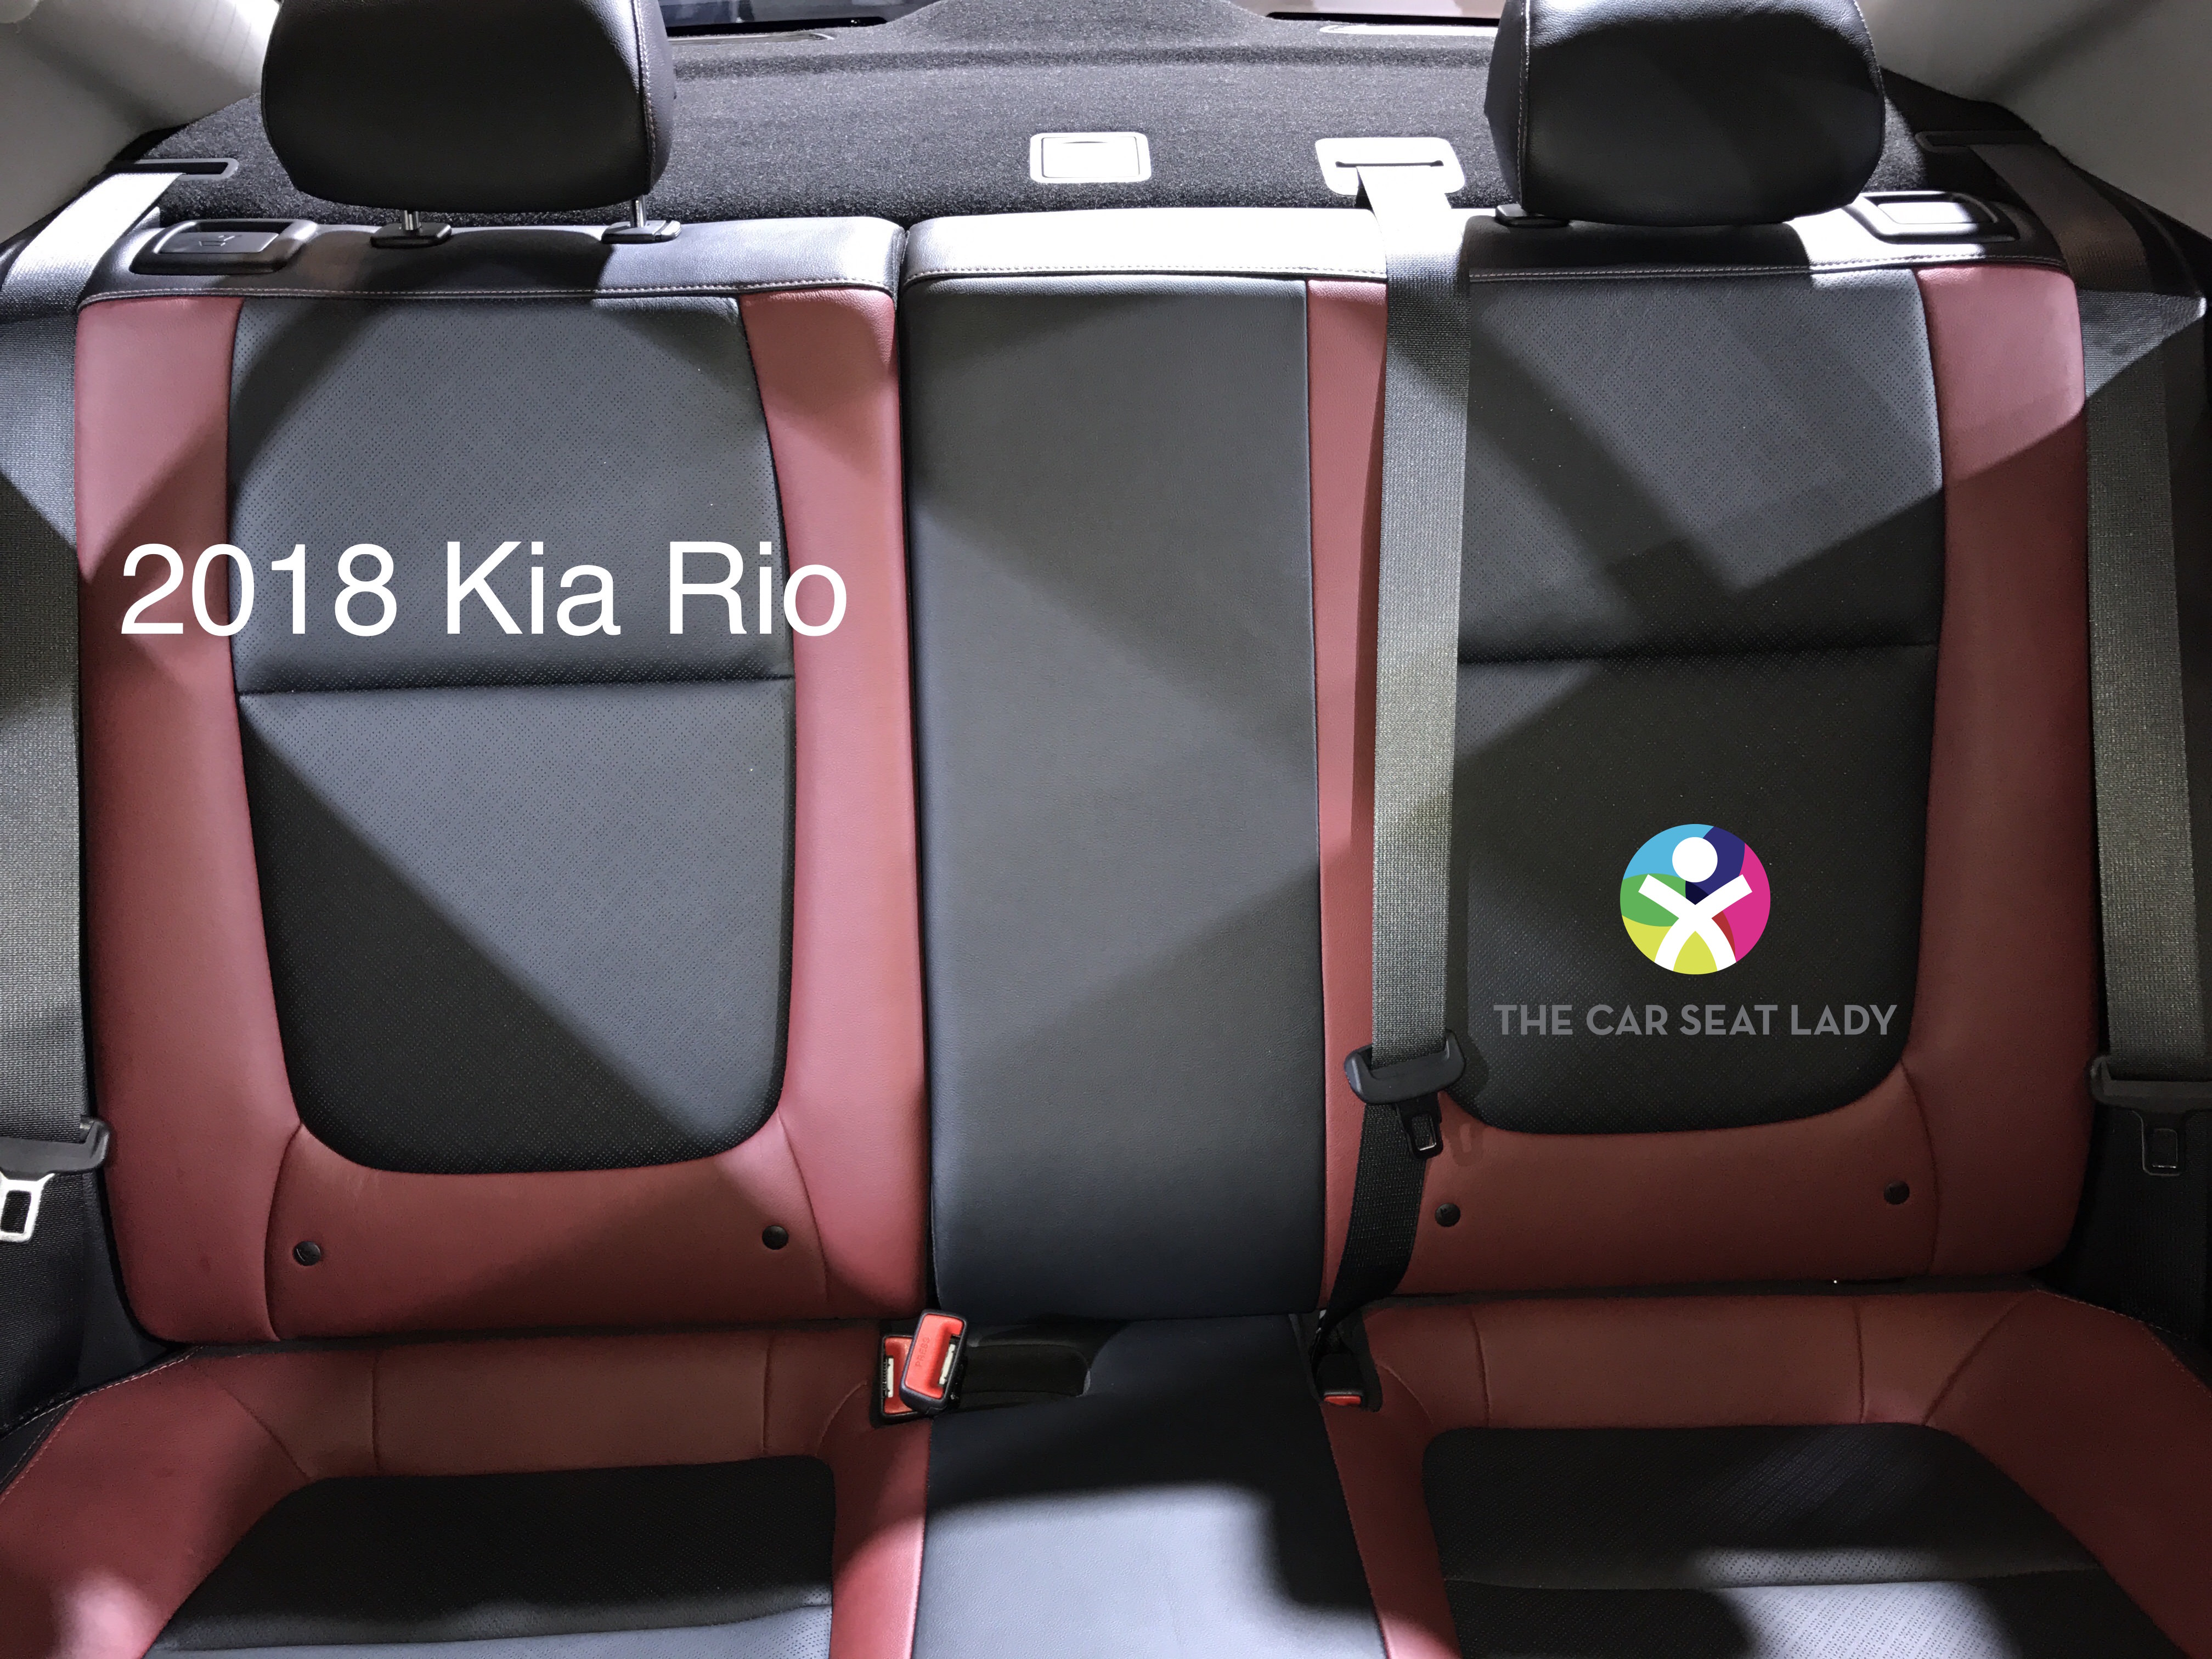 The Car Seat LadyKia Rio - The Car Seat Lady